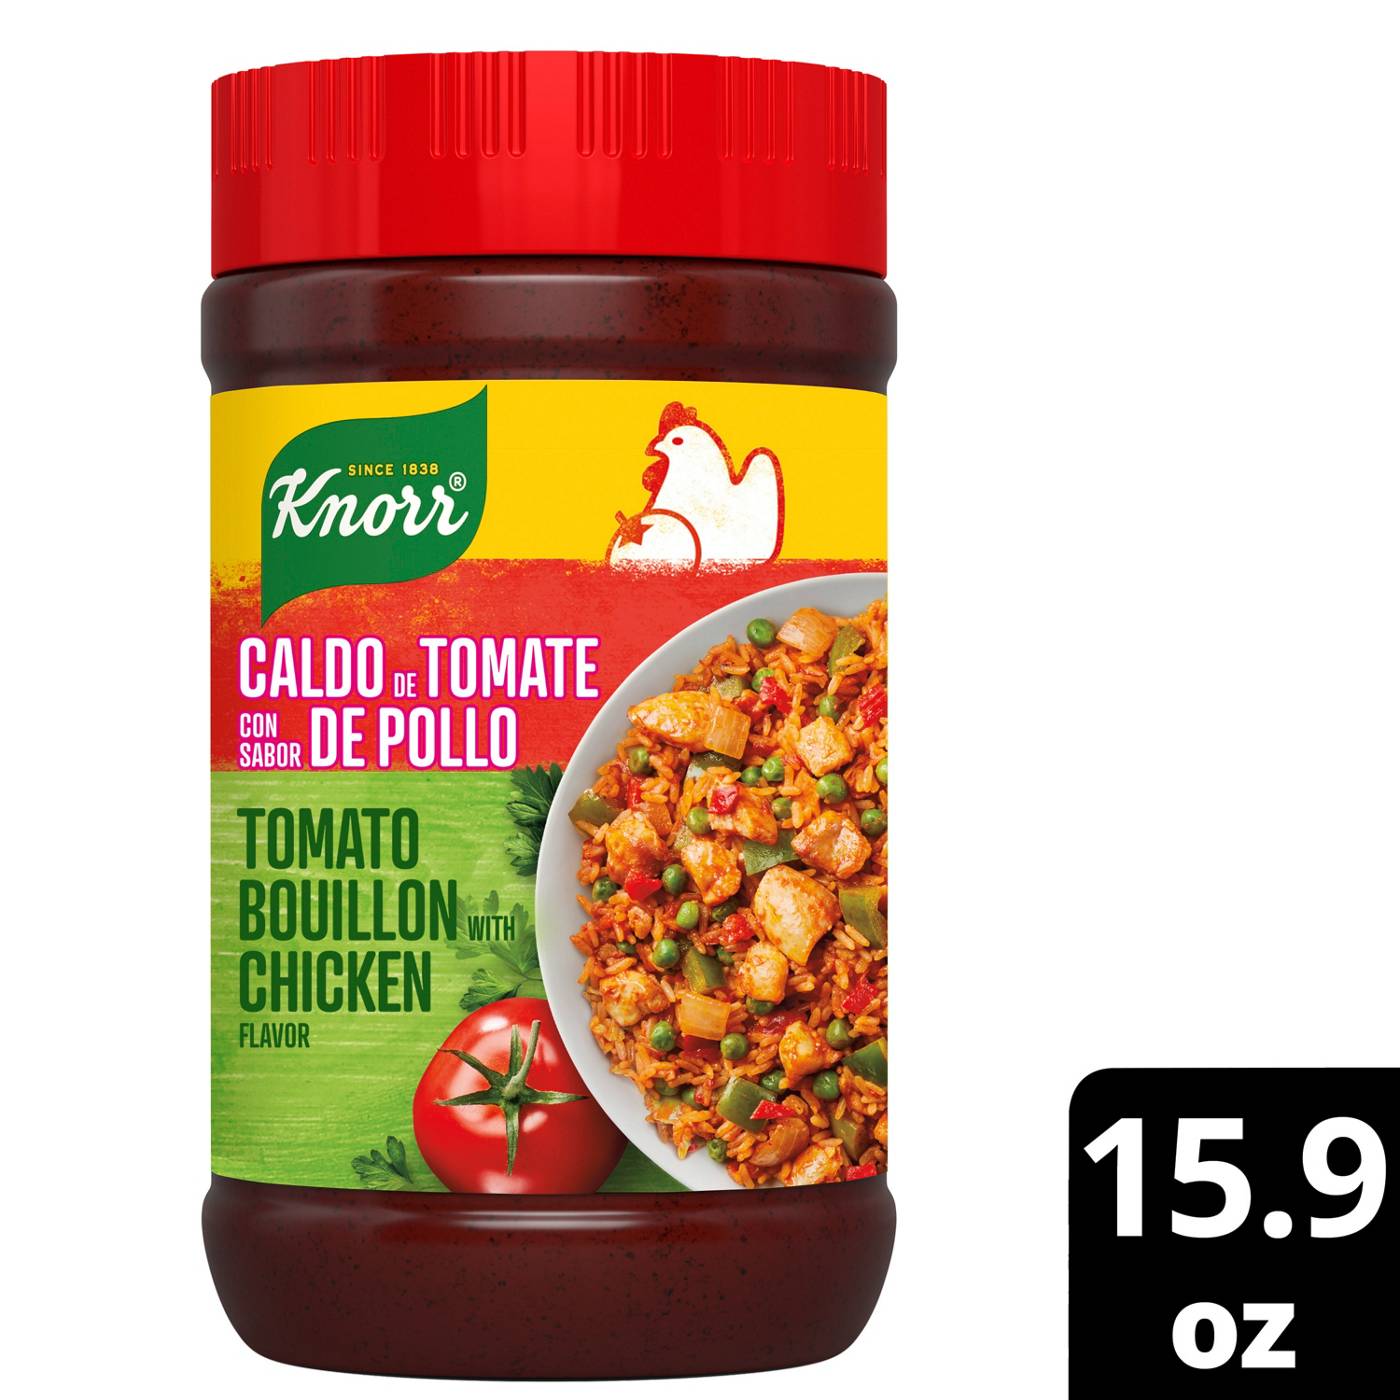 Knorr Granulated Bouillon Tomato Chicken; image 2 of 7